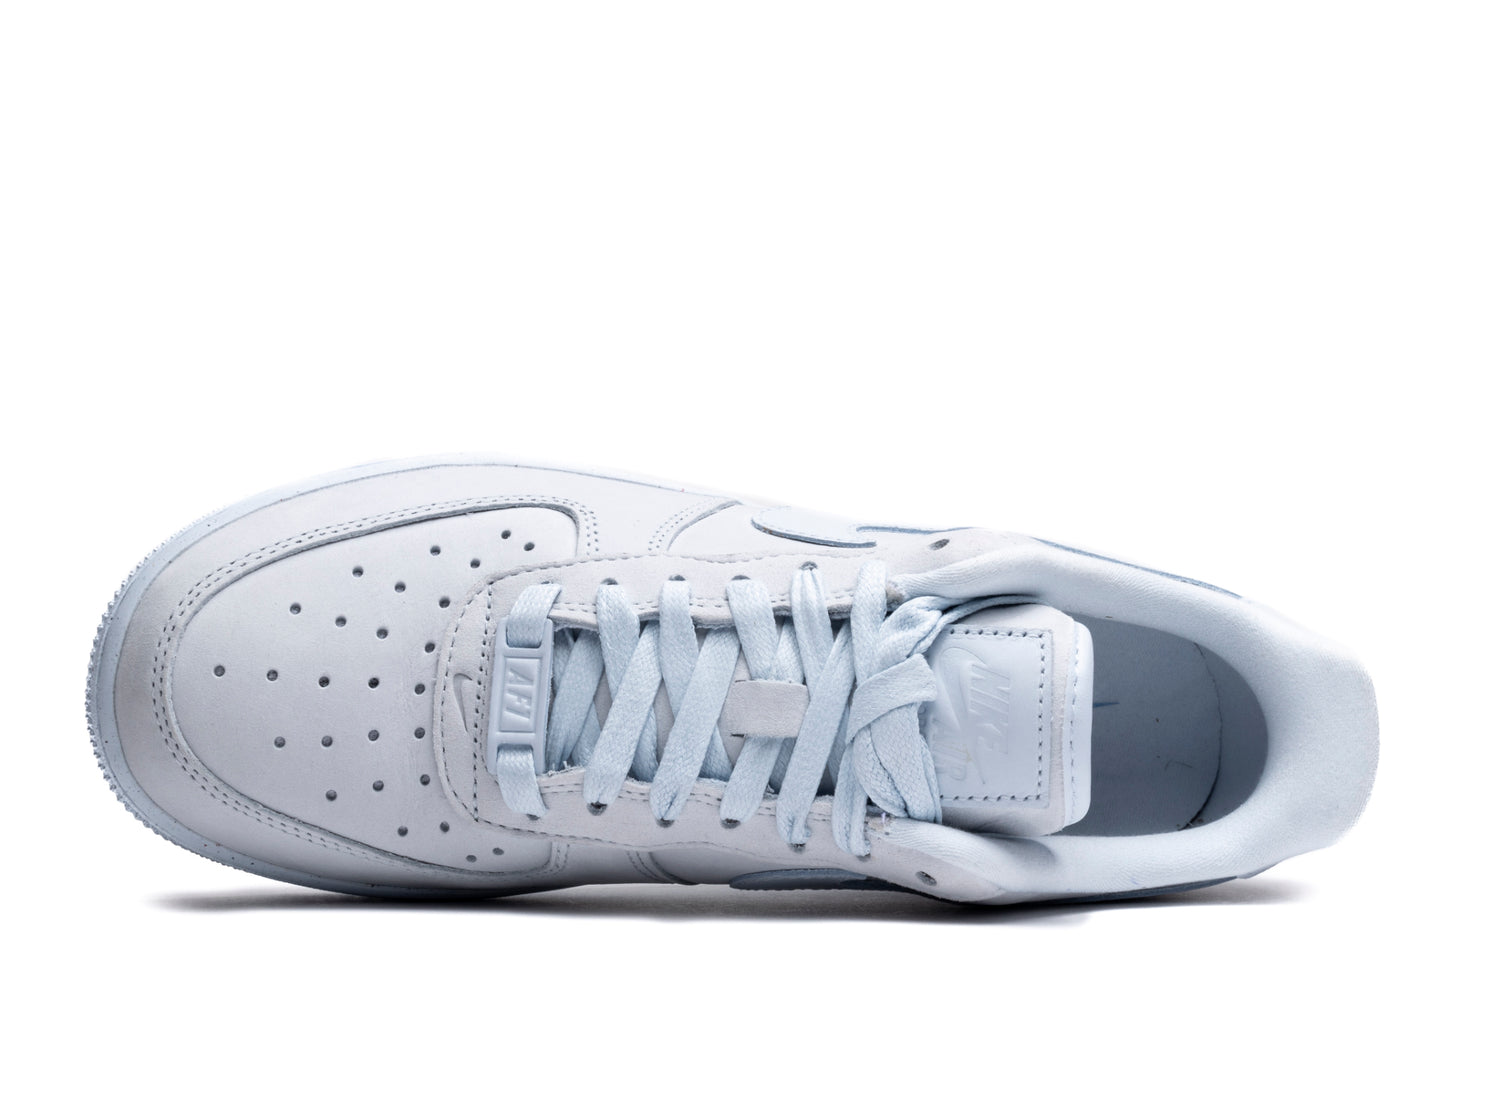 Nike Air Force 1 '07 Premium sneakers in blue tint